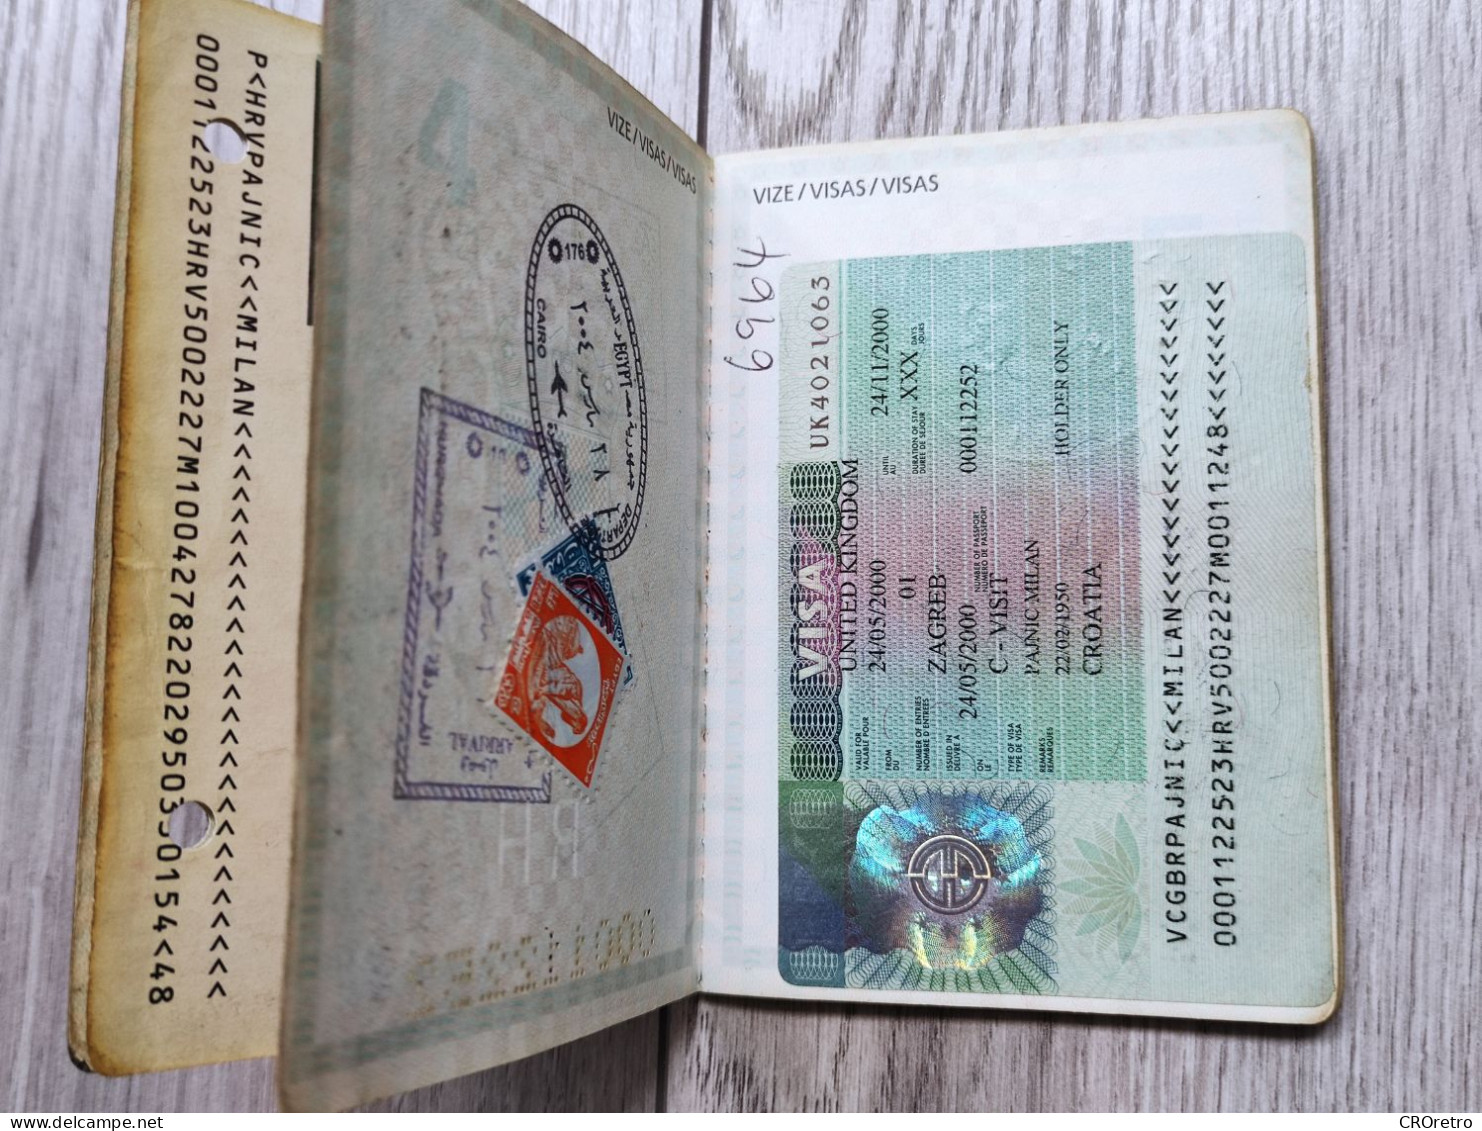 CROATIA - PASSPORT - 2000, visas USA, SOUTH AFRICA, UAE, EGYPT, UNITED KINGDOM,.. complete passport